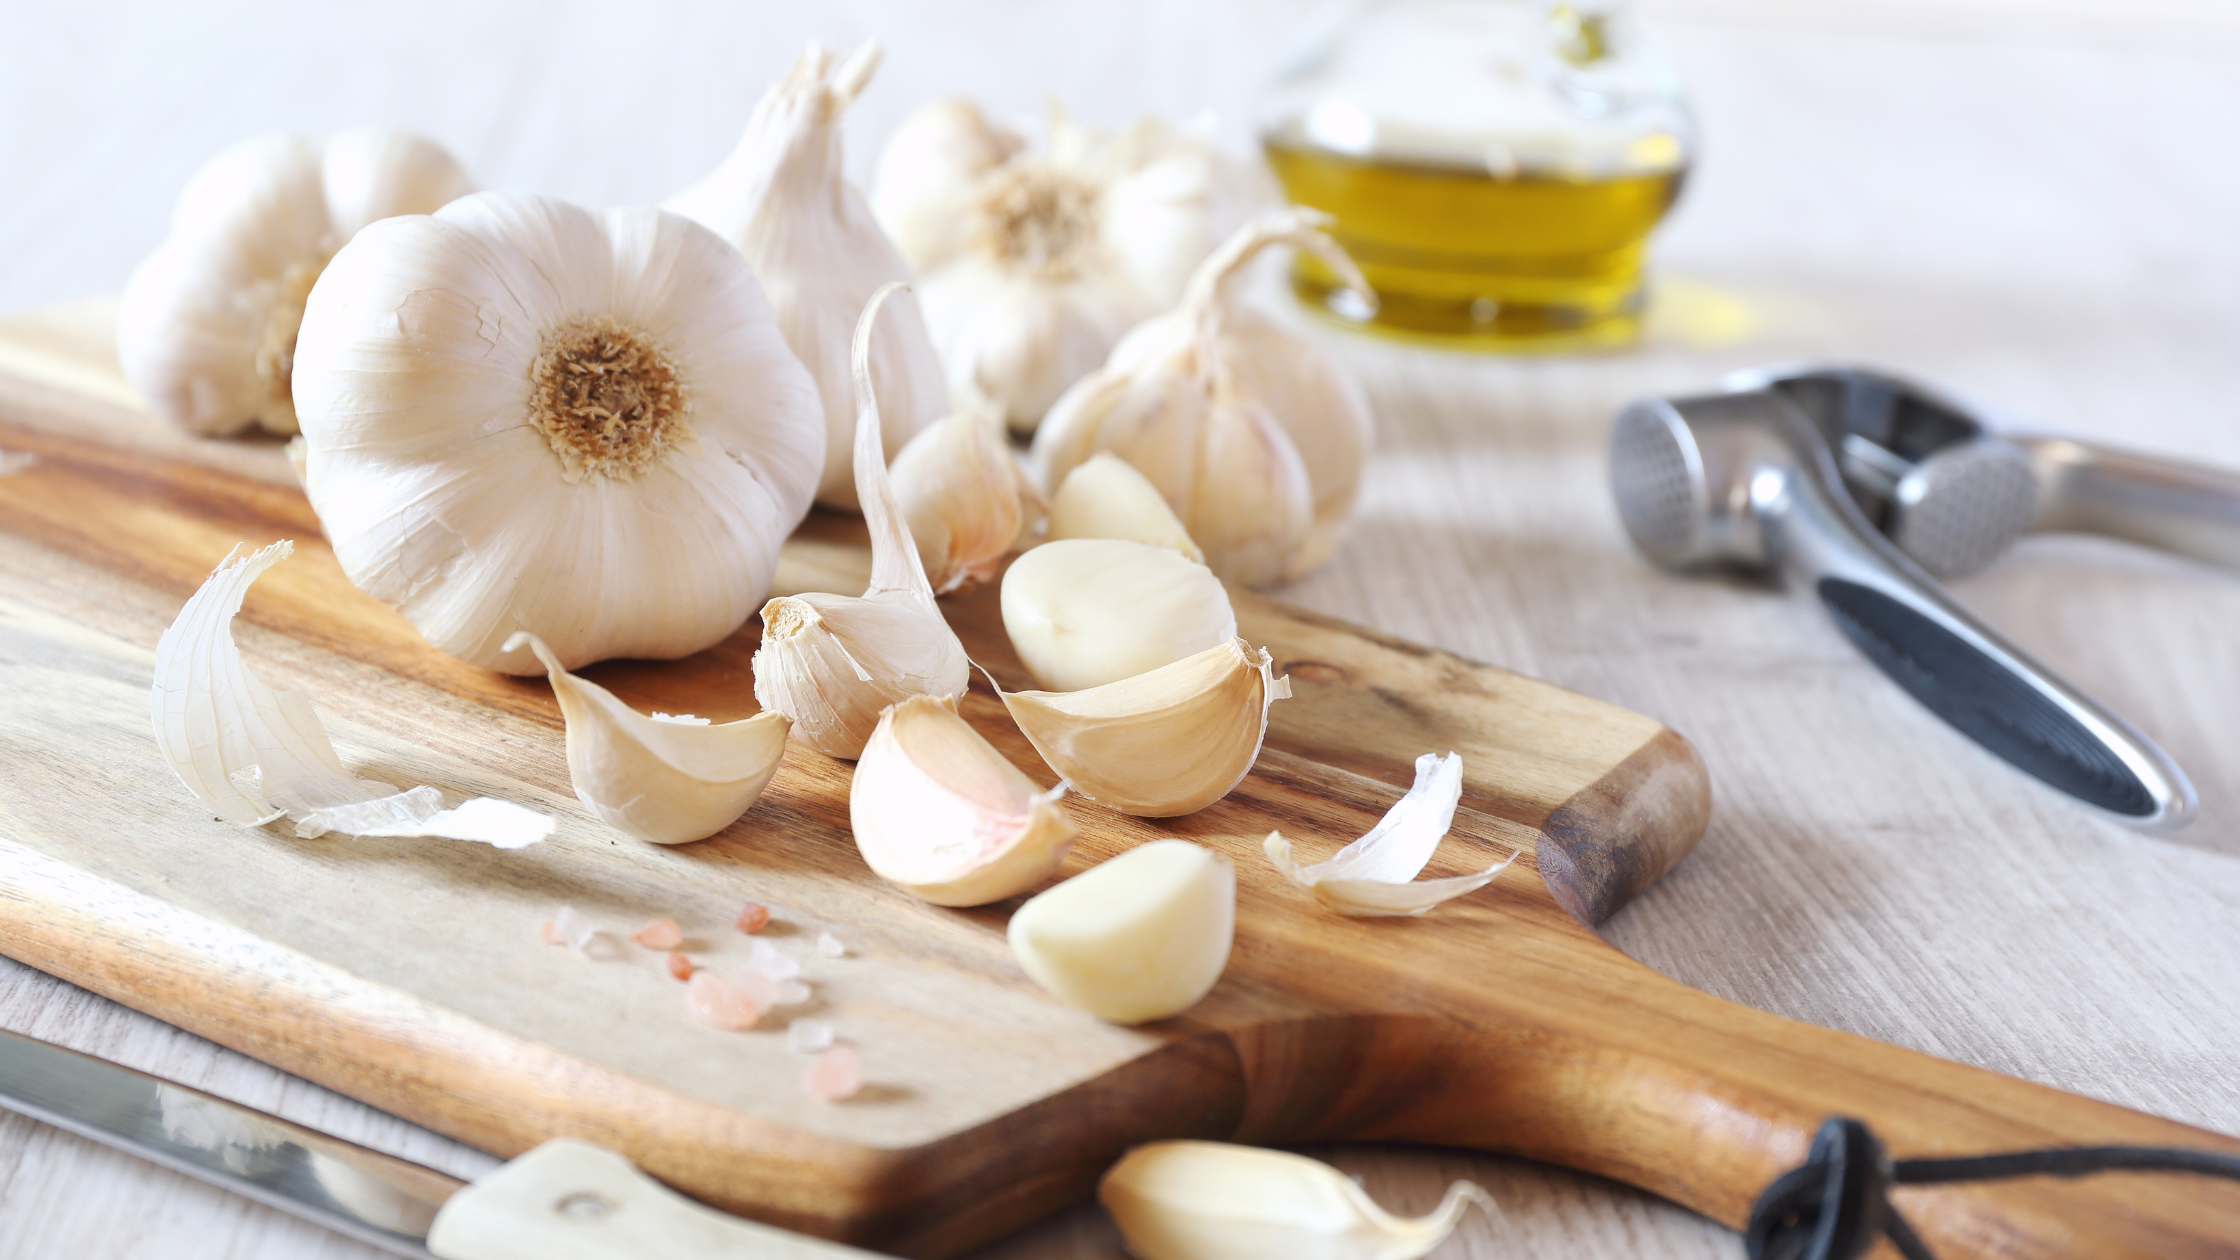 benefits of garlic